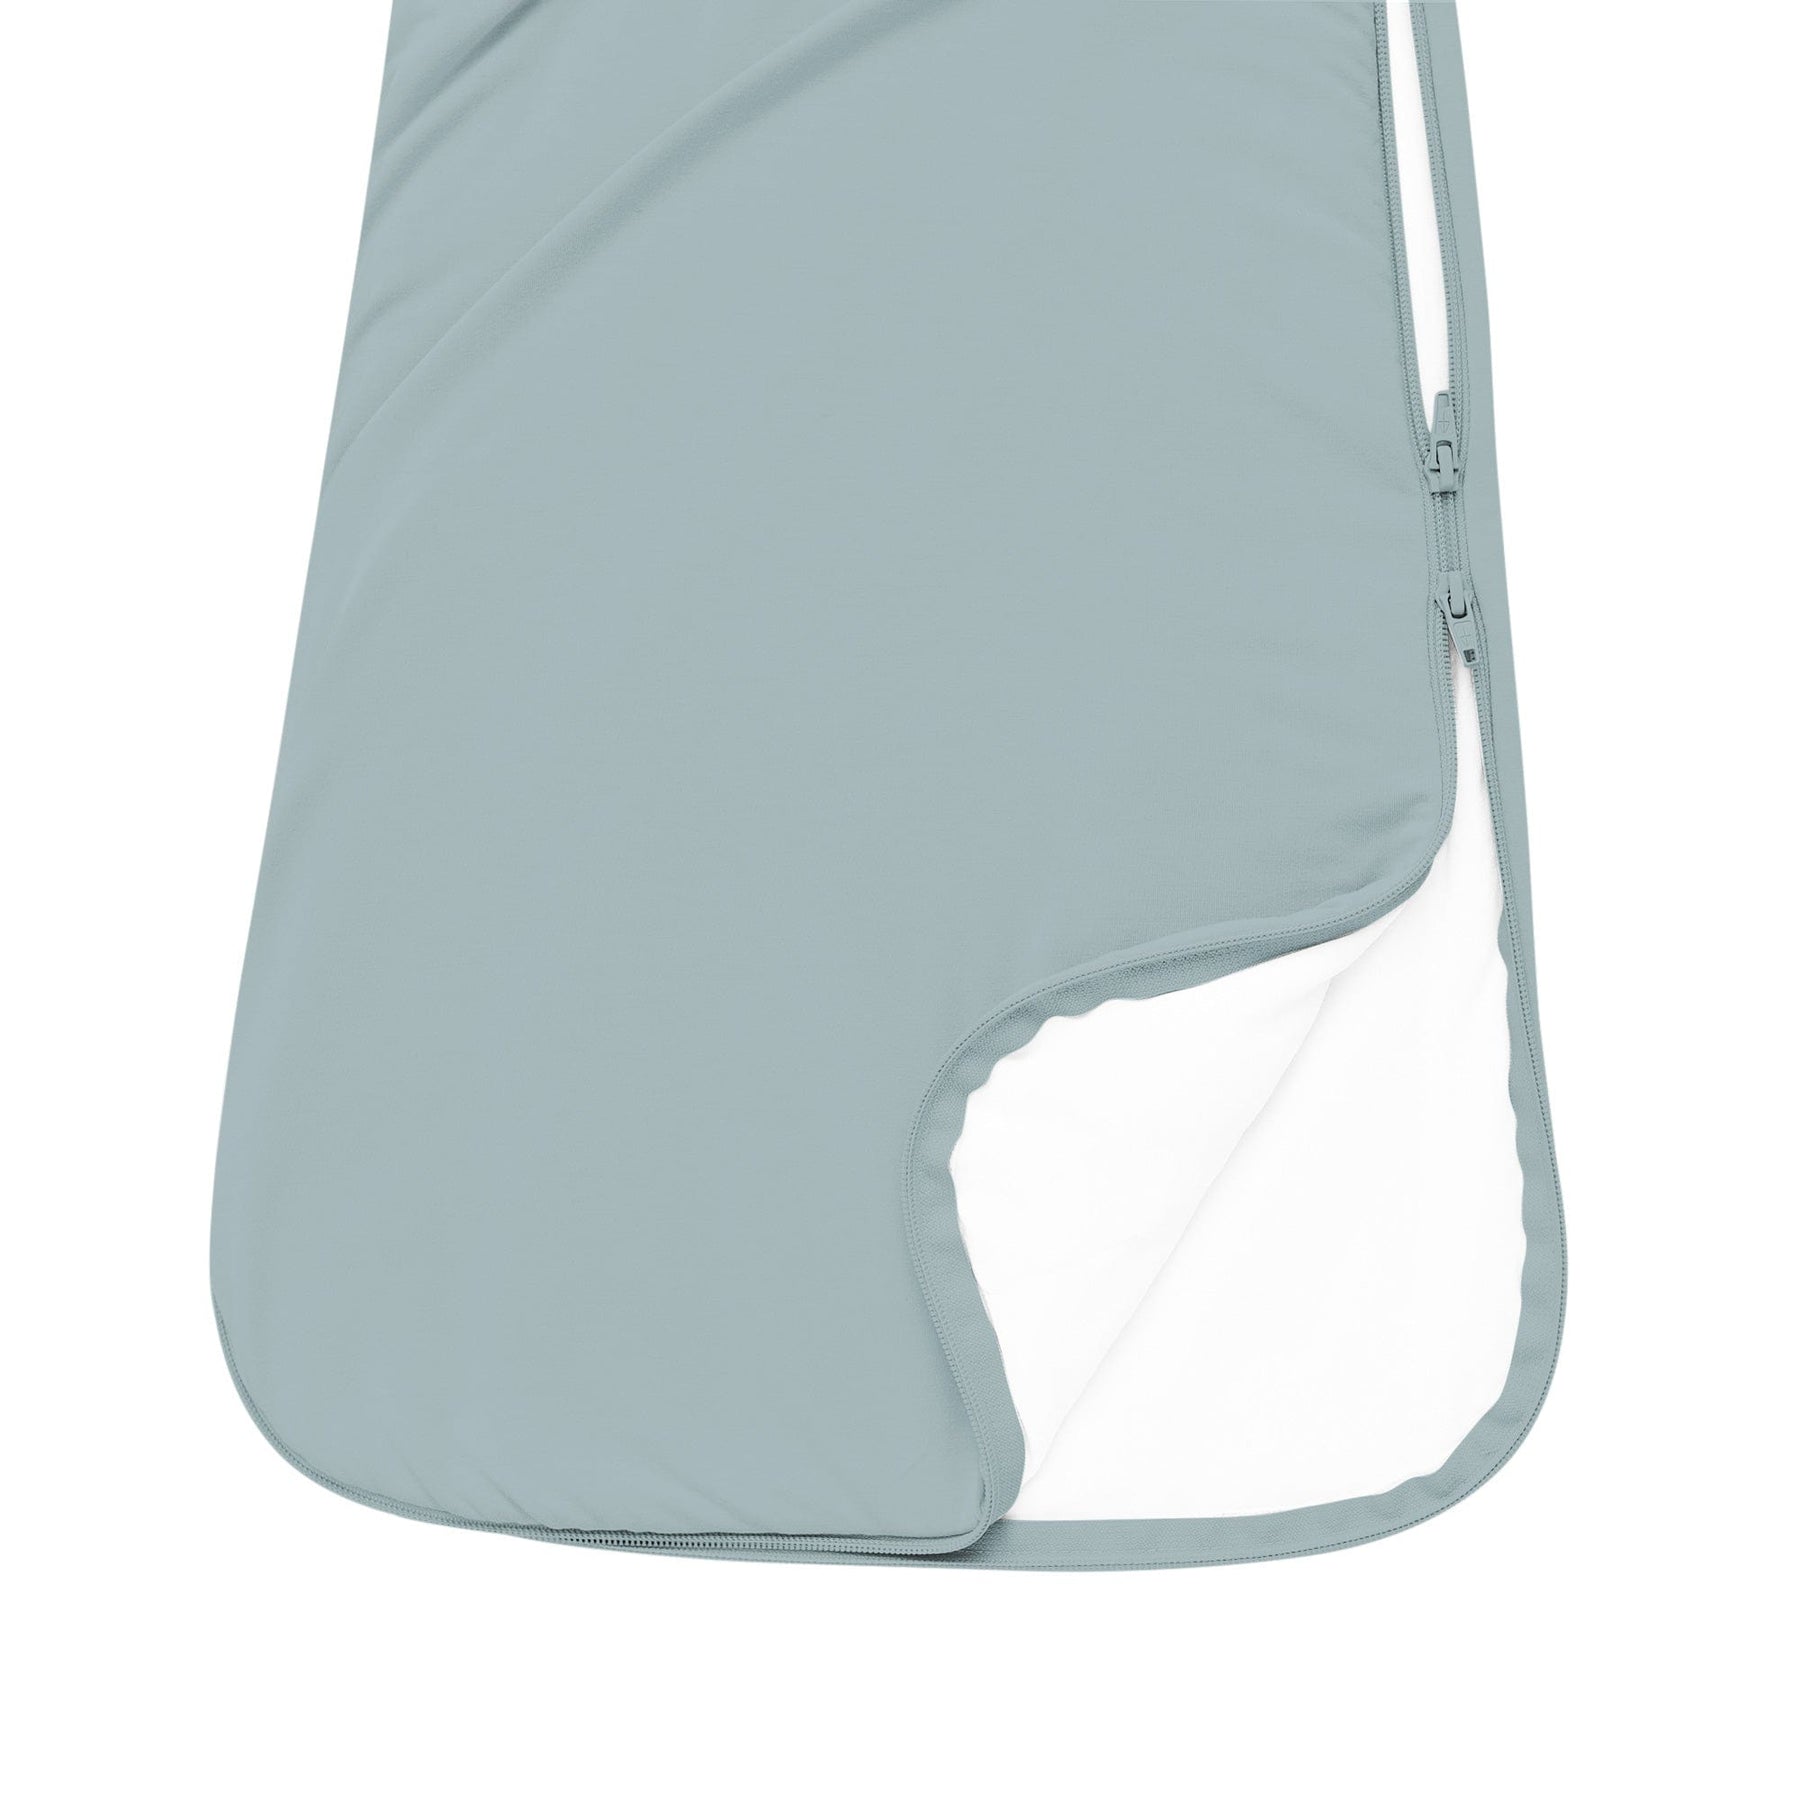 Kyte Baby Sleep Bag 1.0 Tog Sleep Bag in Glacier 1.0